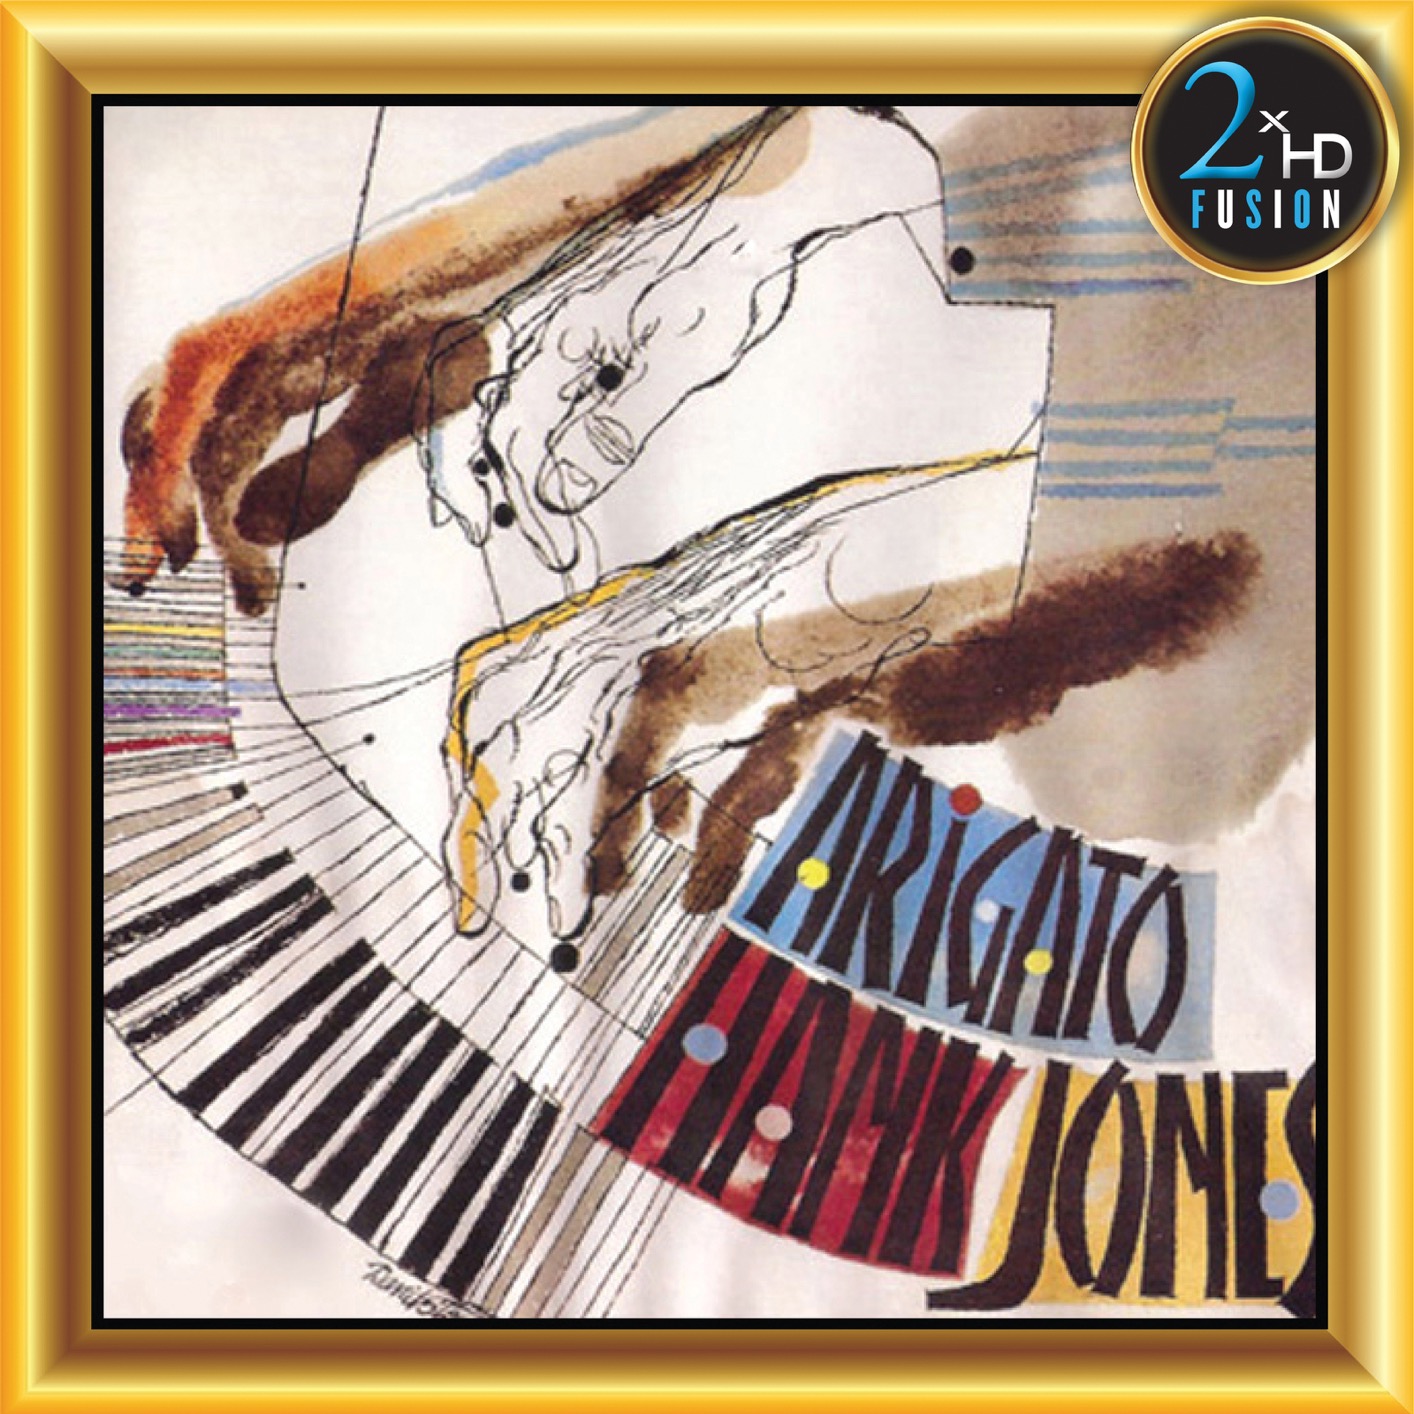 Hank Jones - Arigato (Remastered) (2019) [FLAC 24bit/192kHz]